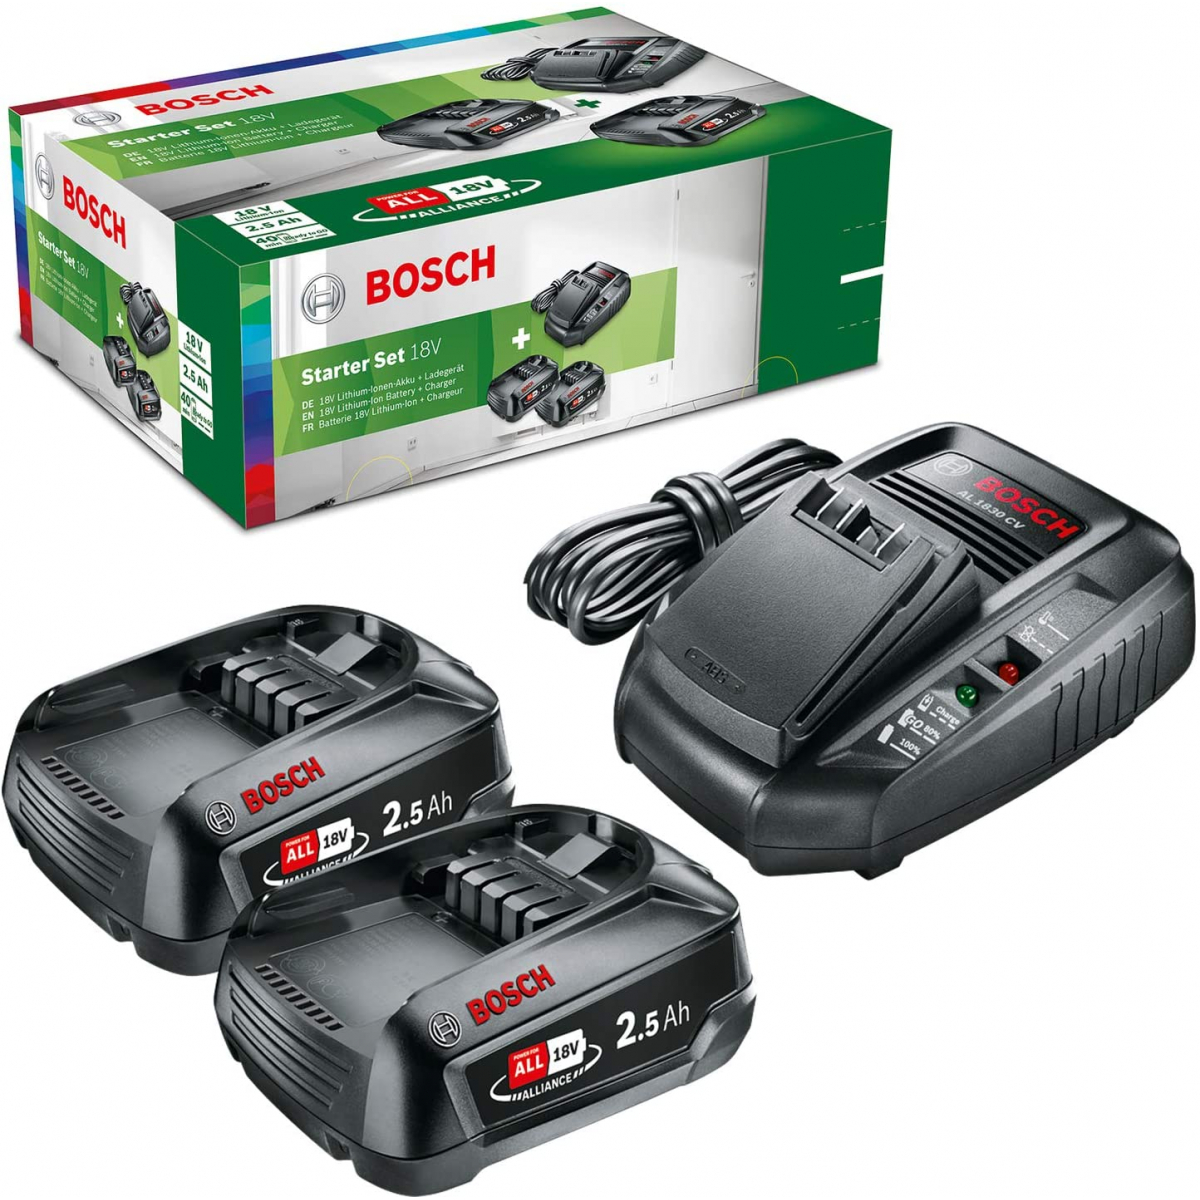 Bosch Starter set Batterie PBA 18V 2x2.5Ah W-B + chargeur 1h